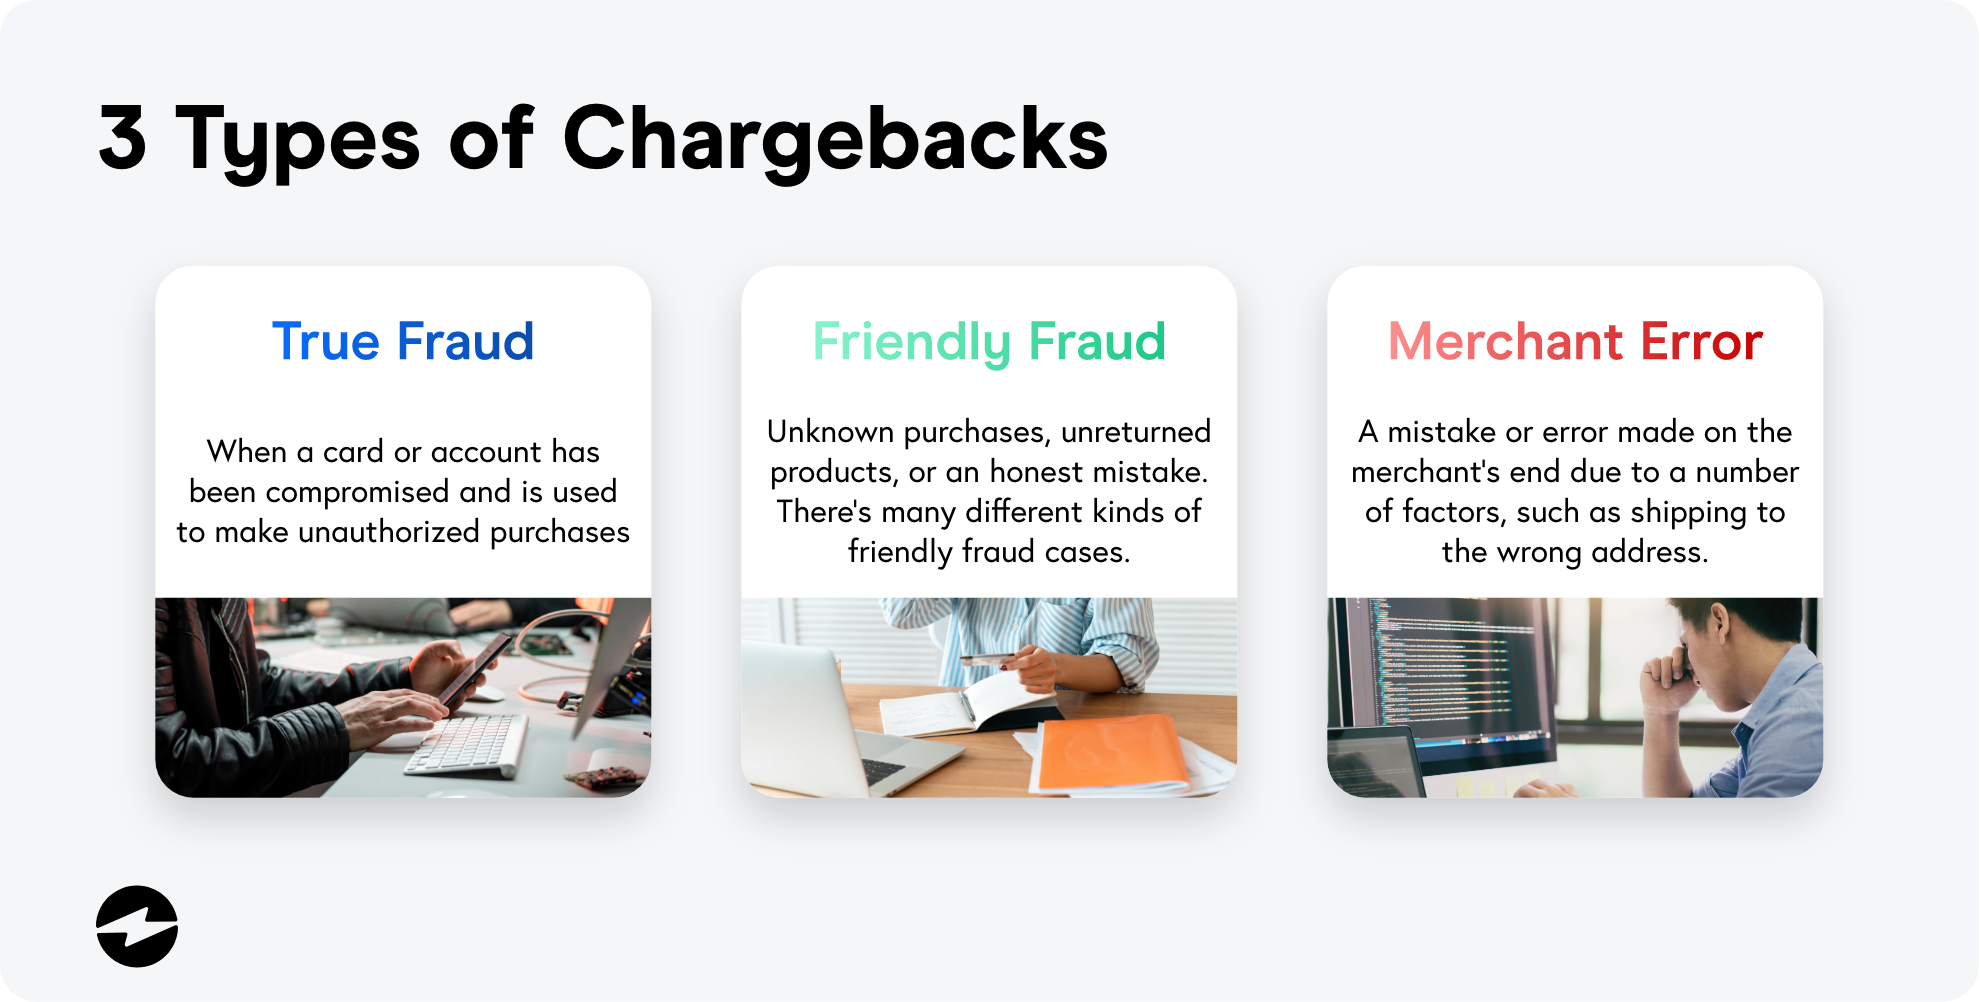 Types of chargebacks